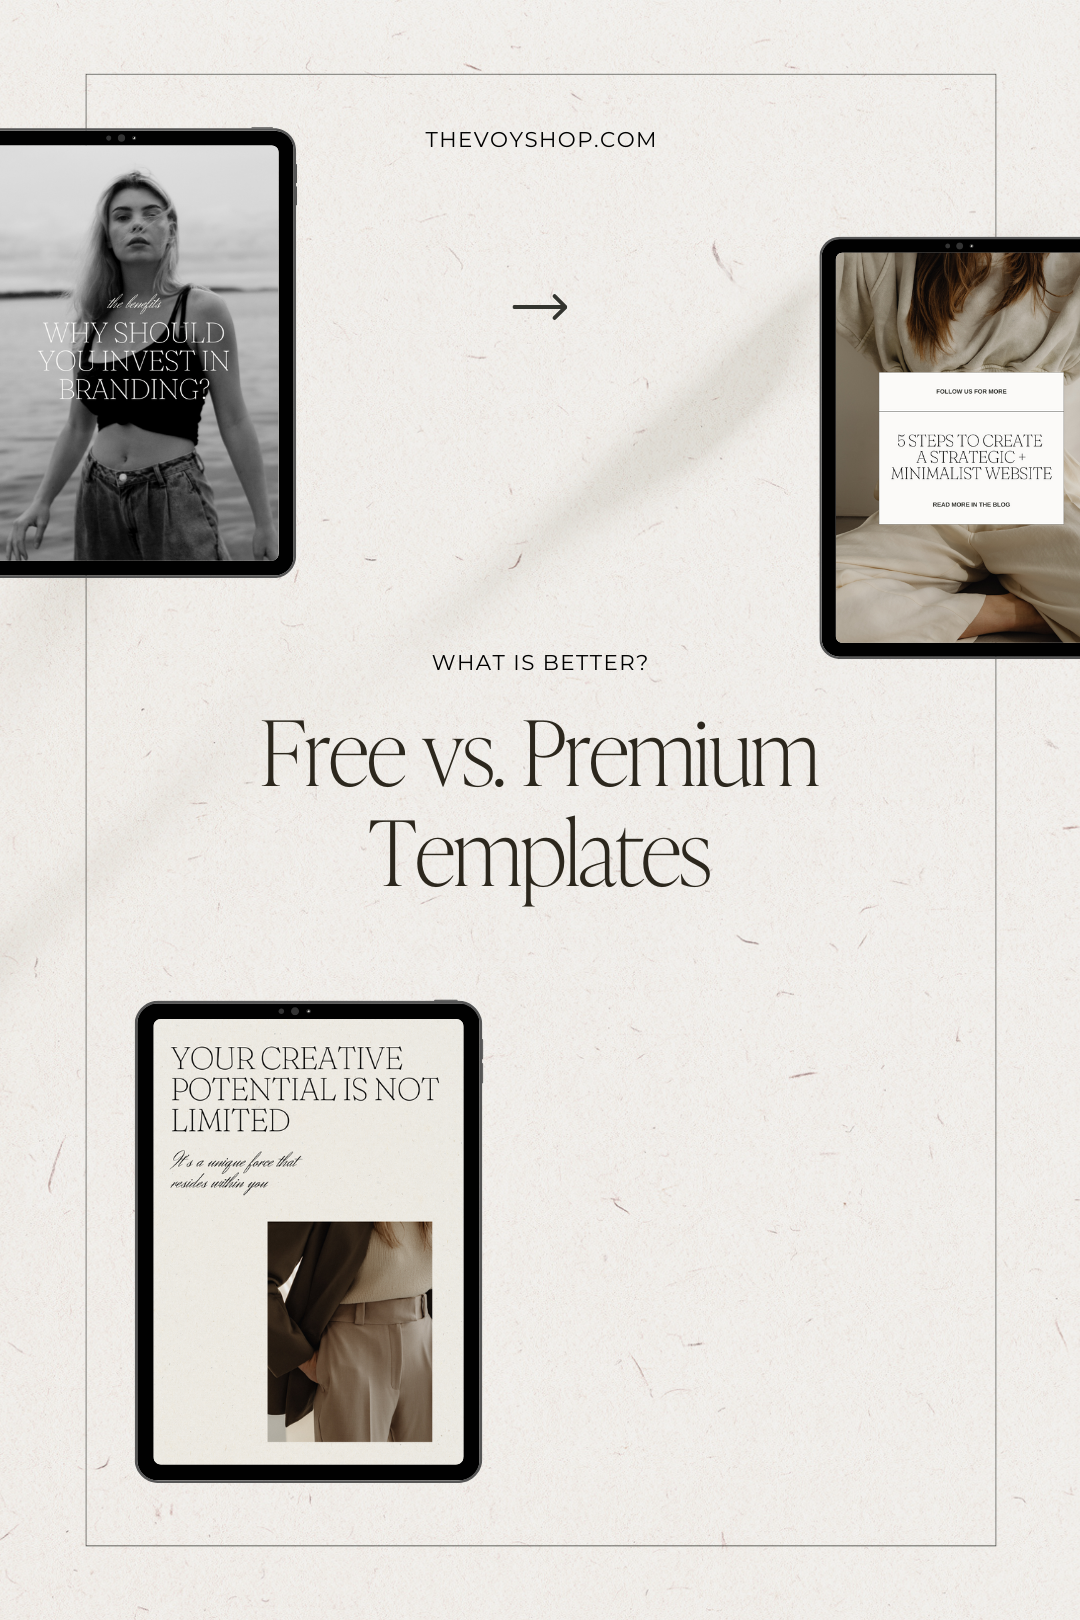 Free vs. Premium Instagram Templates – Which Are Better?